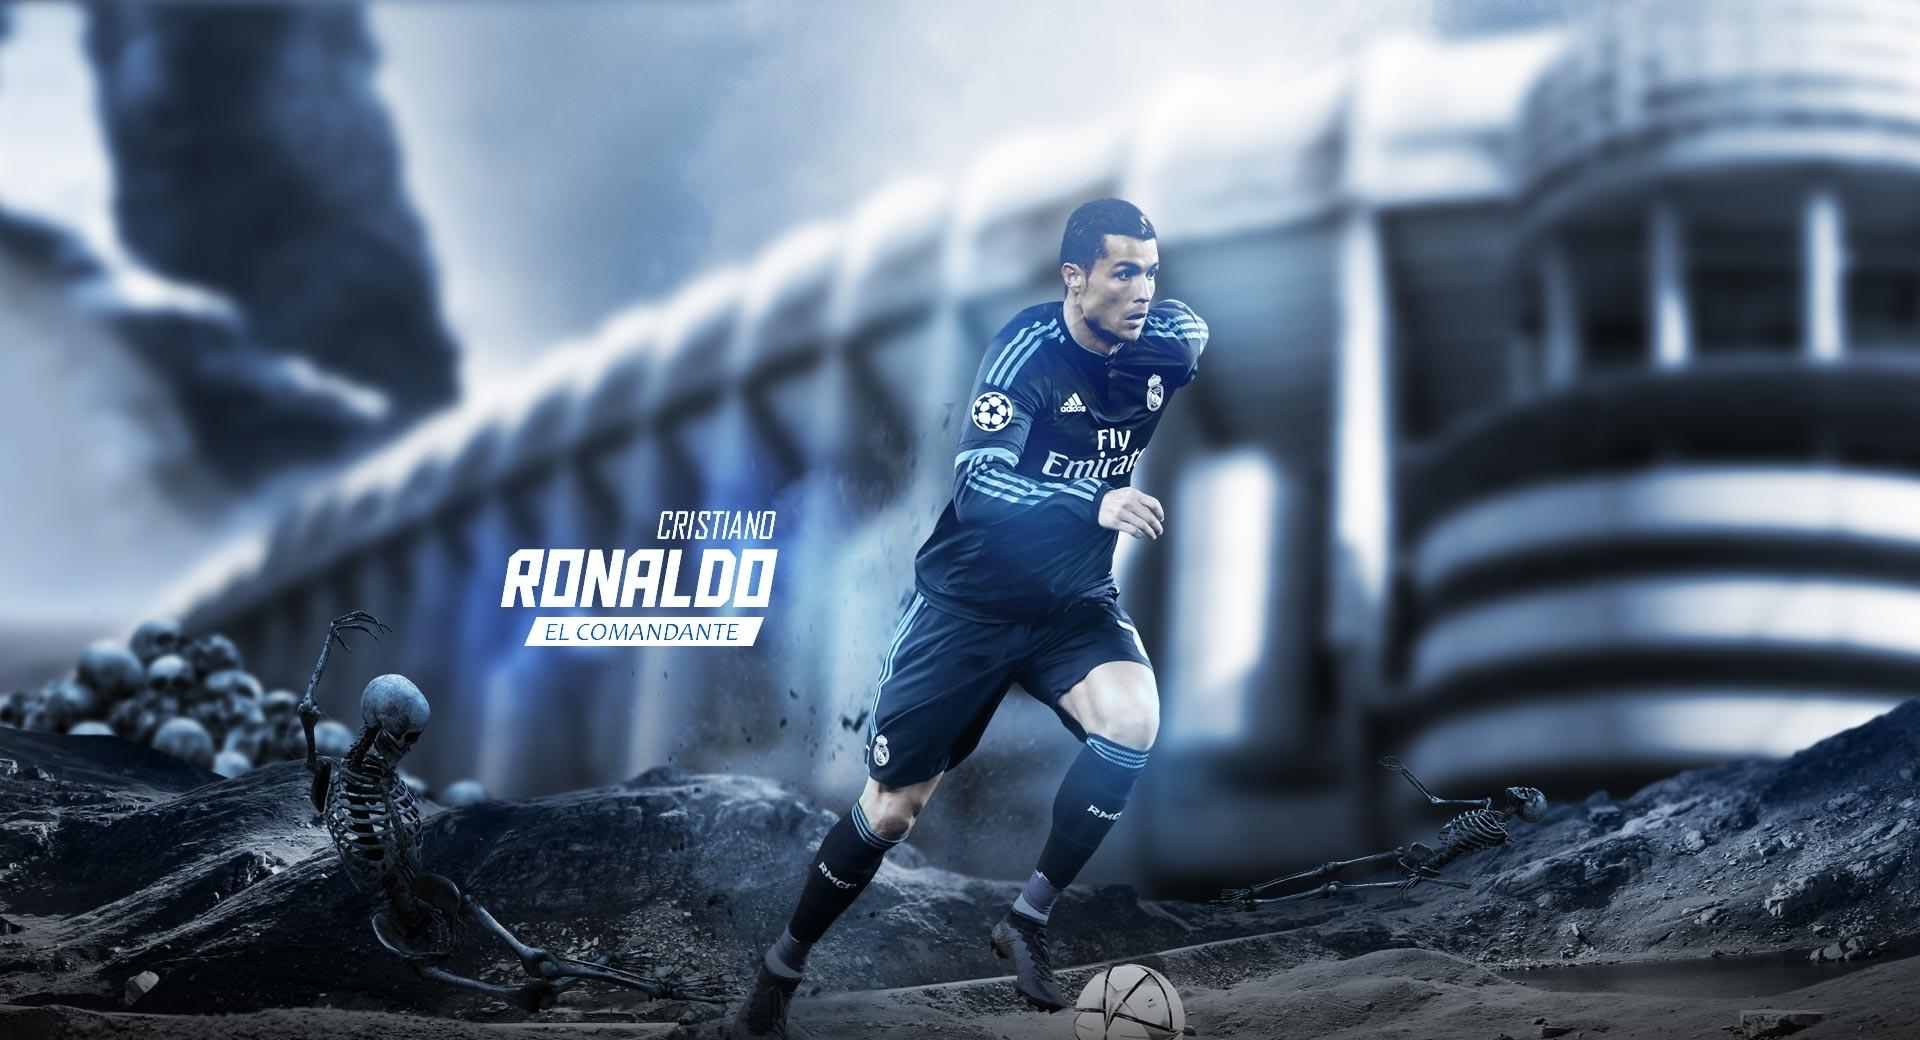 Cristiano Ronaldo - El Comandante at 1600 x 1200 size wallpapers HD quality